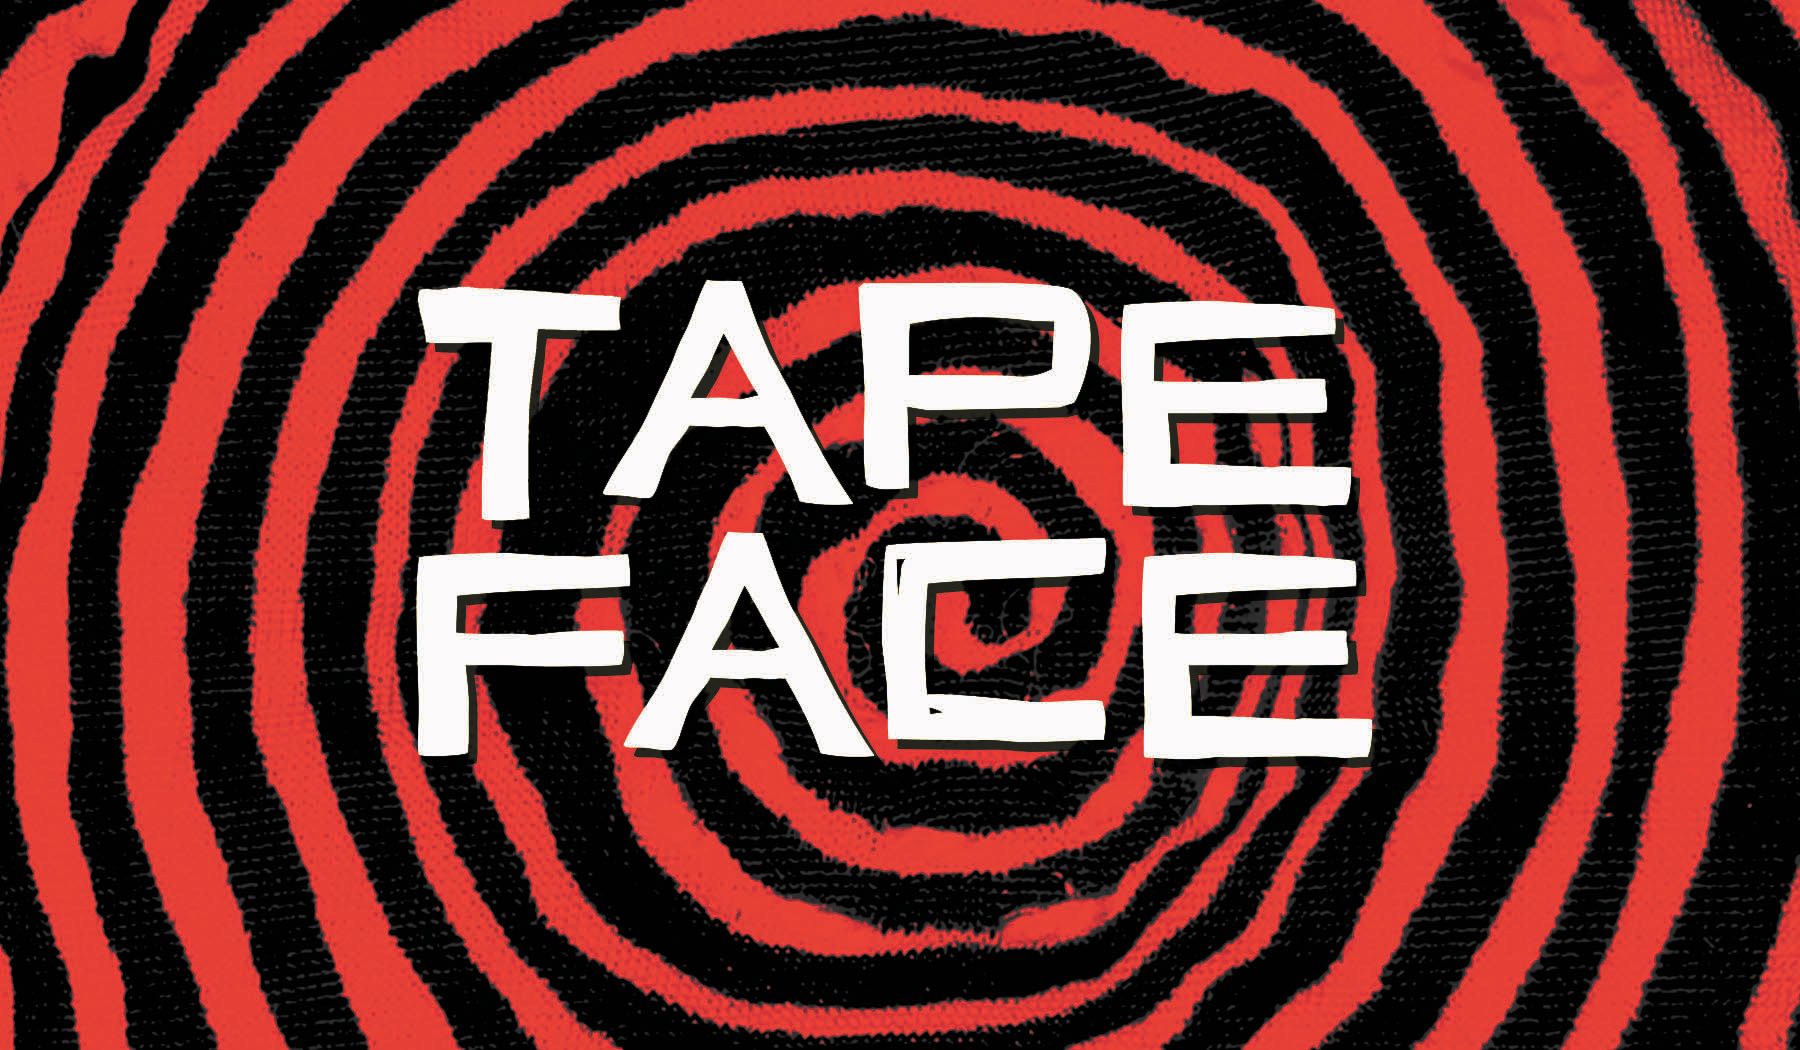 tape face vegas show